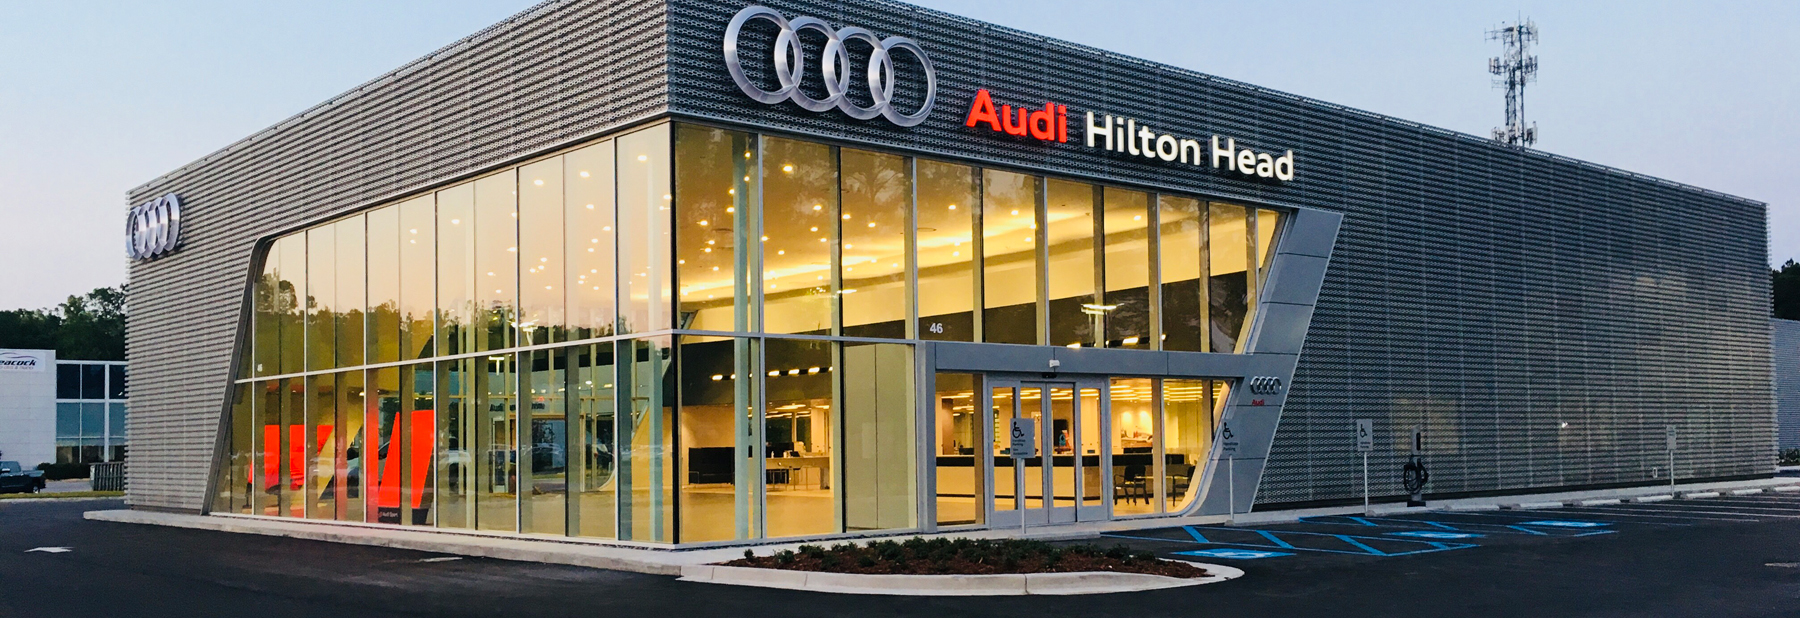 Audi Hilton Head